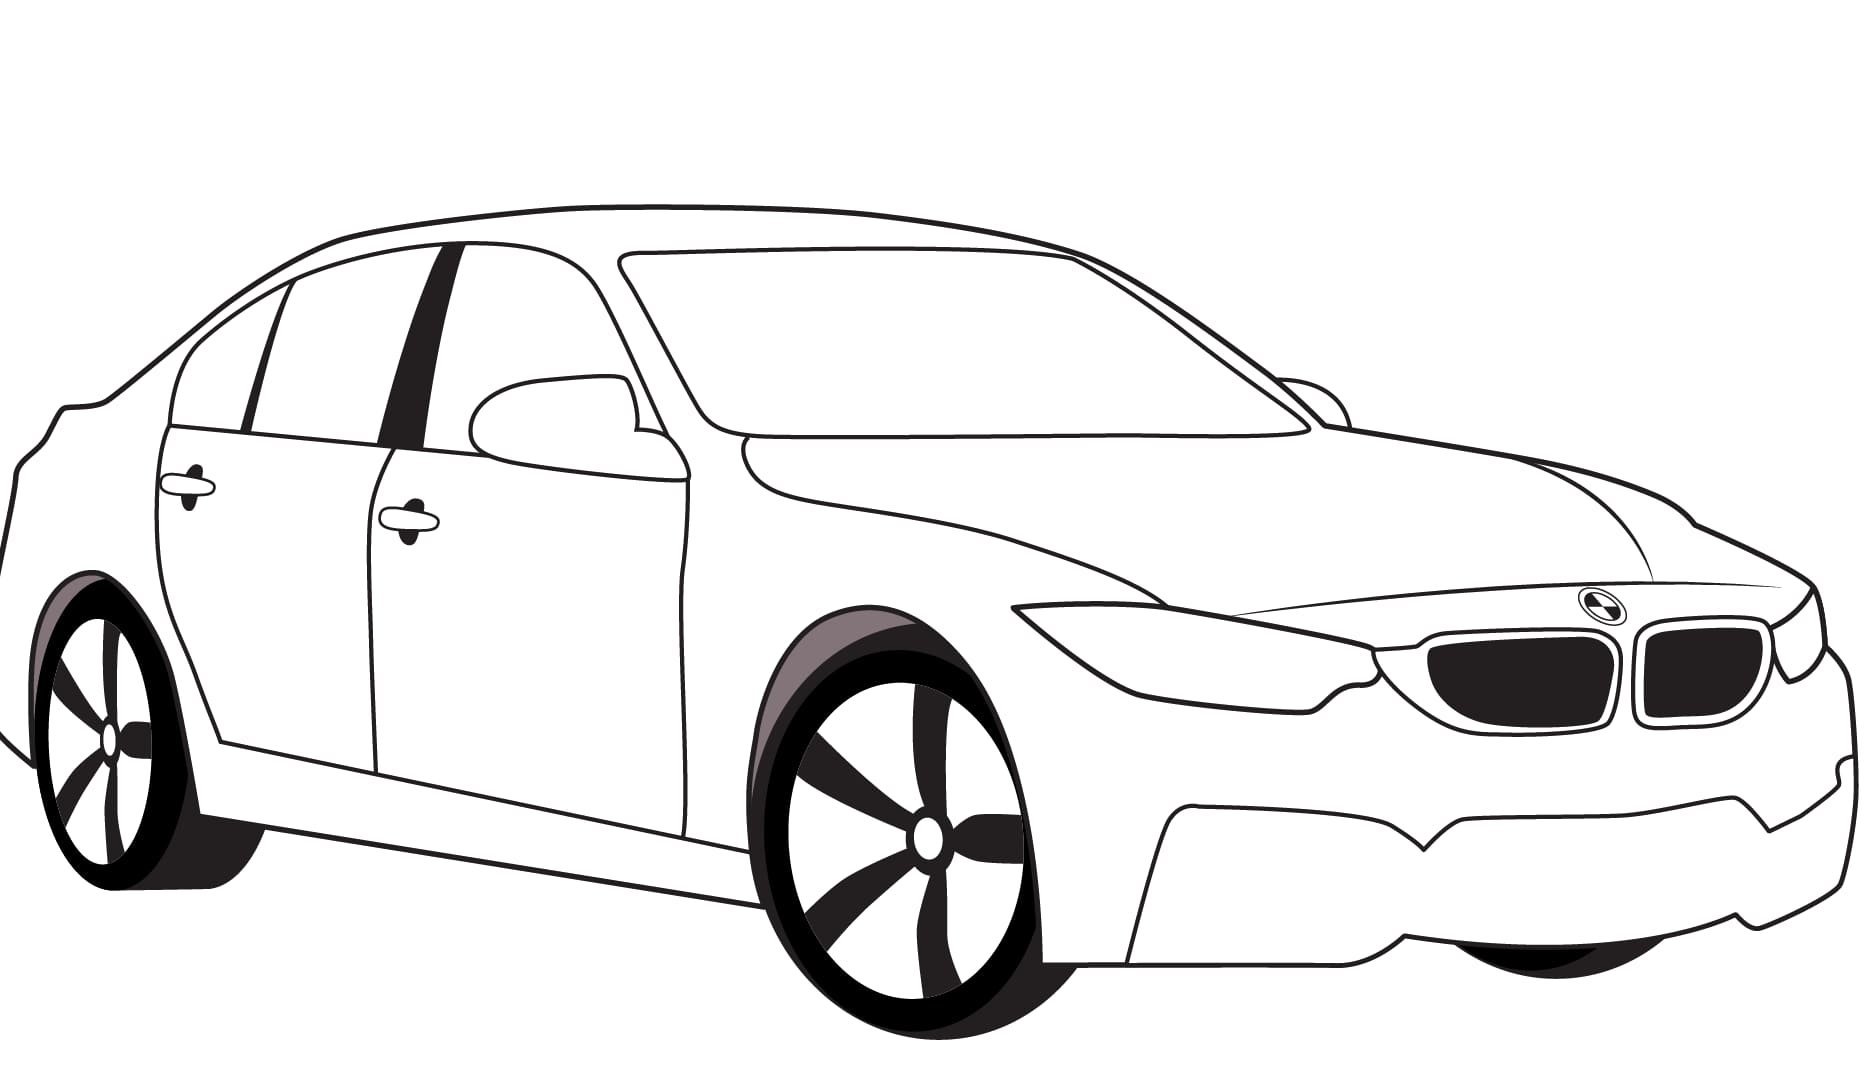 Распечатать м5. Раскраска БМВ м5. Раскраска BMW m5 f90. Раскраска BMW e60. BMW m5 f90 скетч.